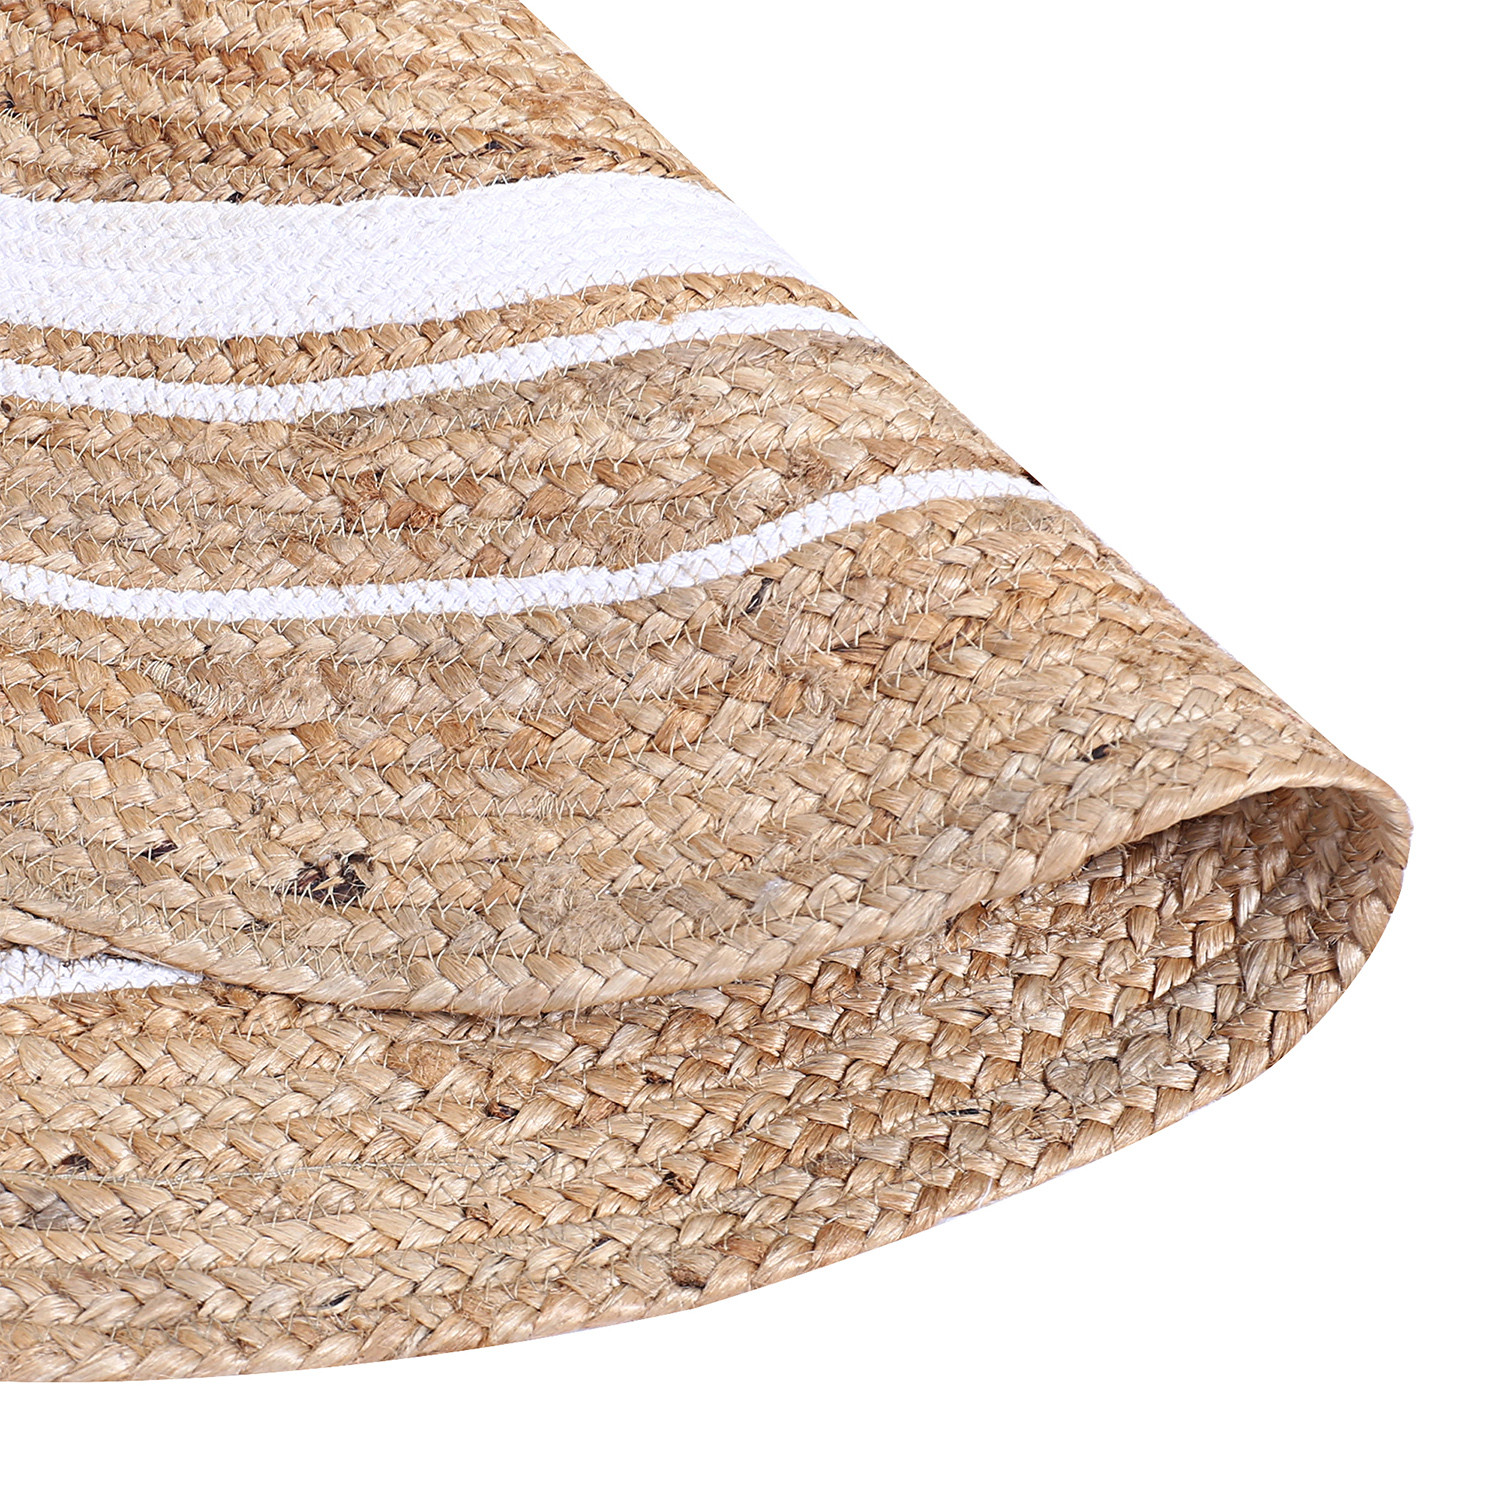 Kuber Industries Hand Woven Braided Carpet Rugs|Non-Slip Round Traditional Spiral Design Jute Door mat|Mat For Bedroom,Living Room,Dining Room,Yoga,71x71 cm,(White)